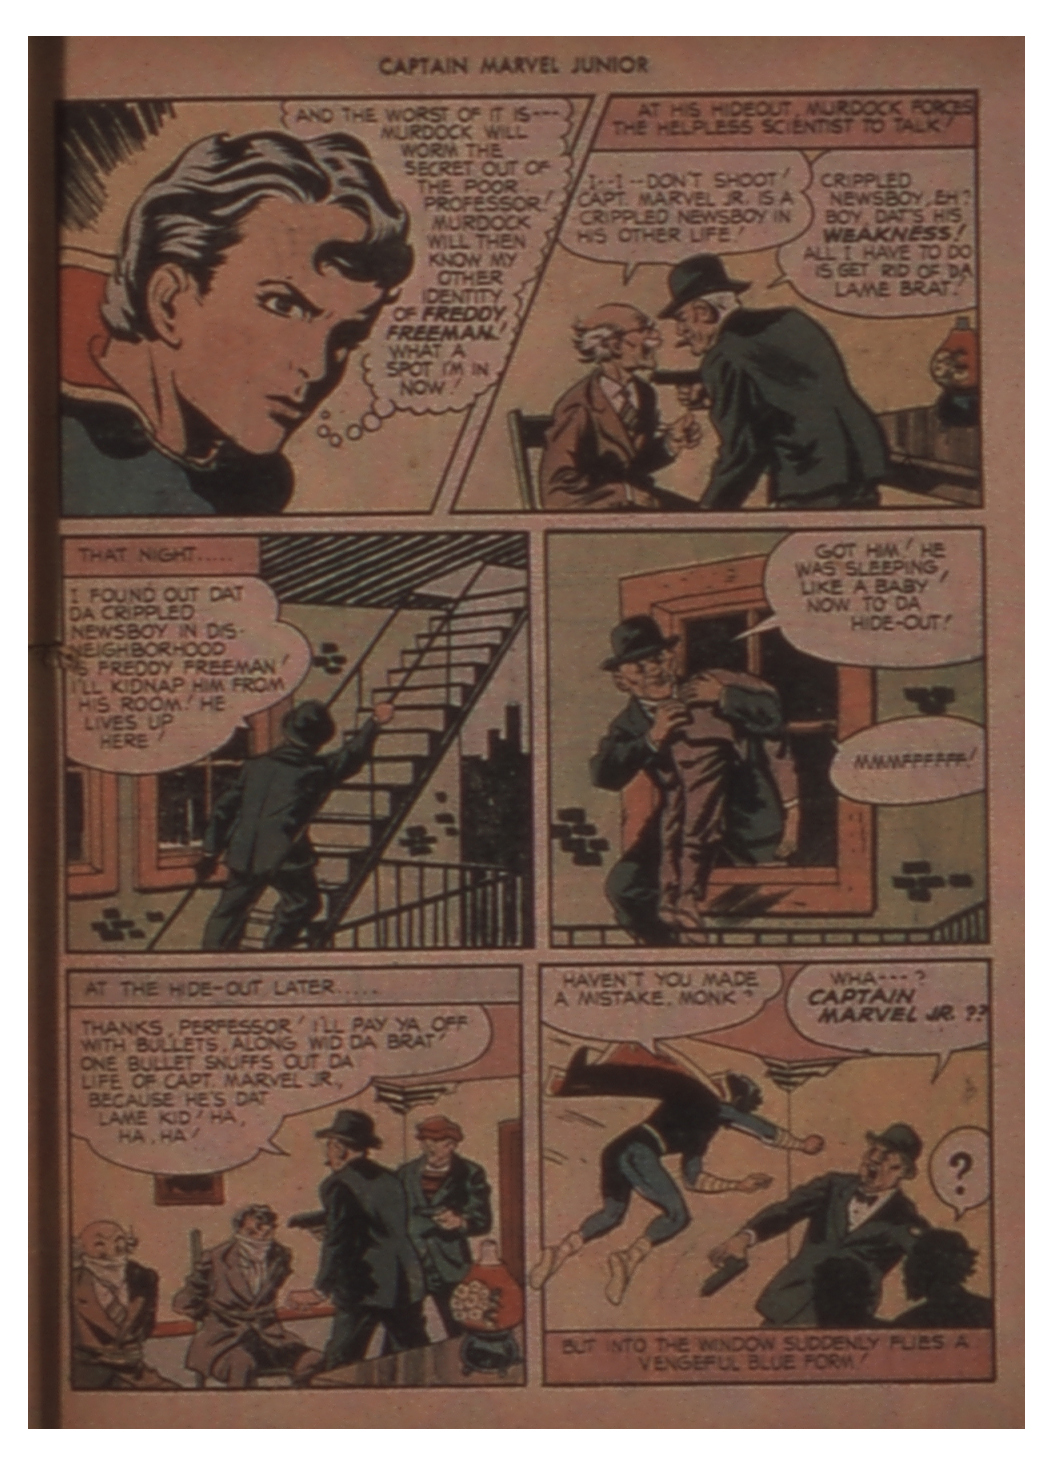 Read online Captain Marvel, Jr. comic -  Issue #18 - 49